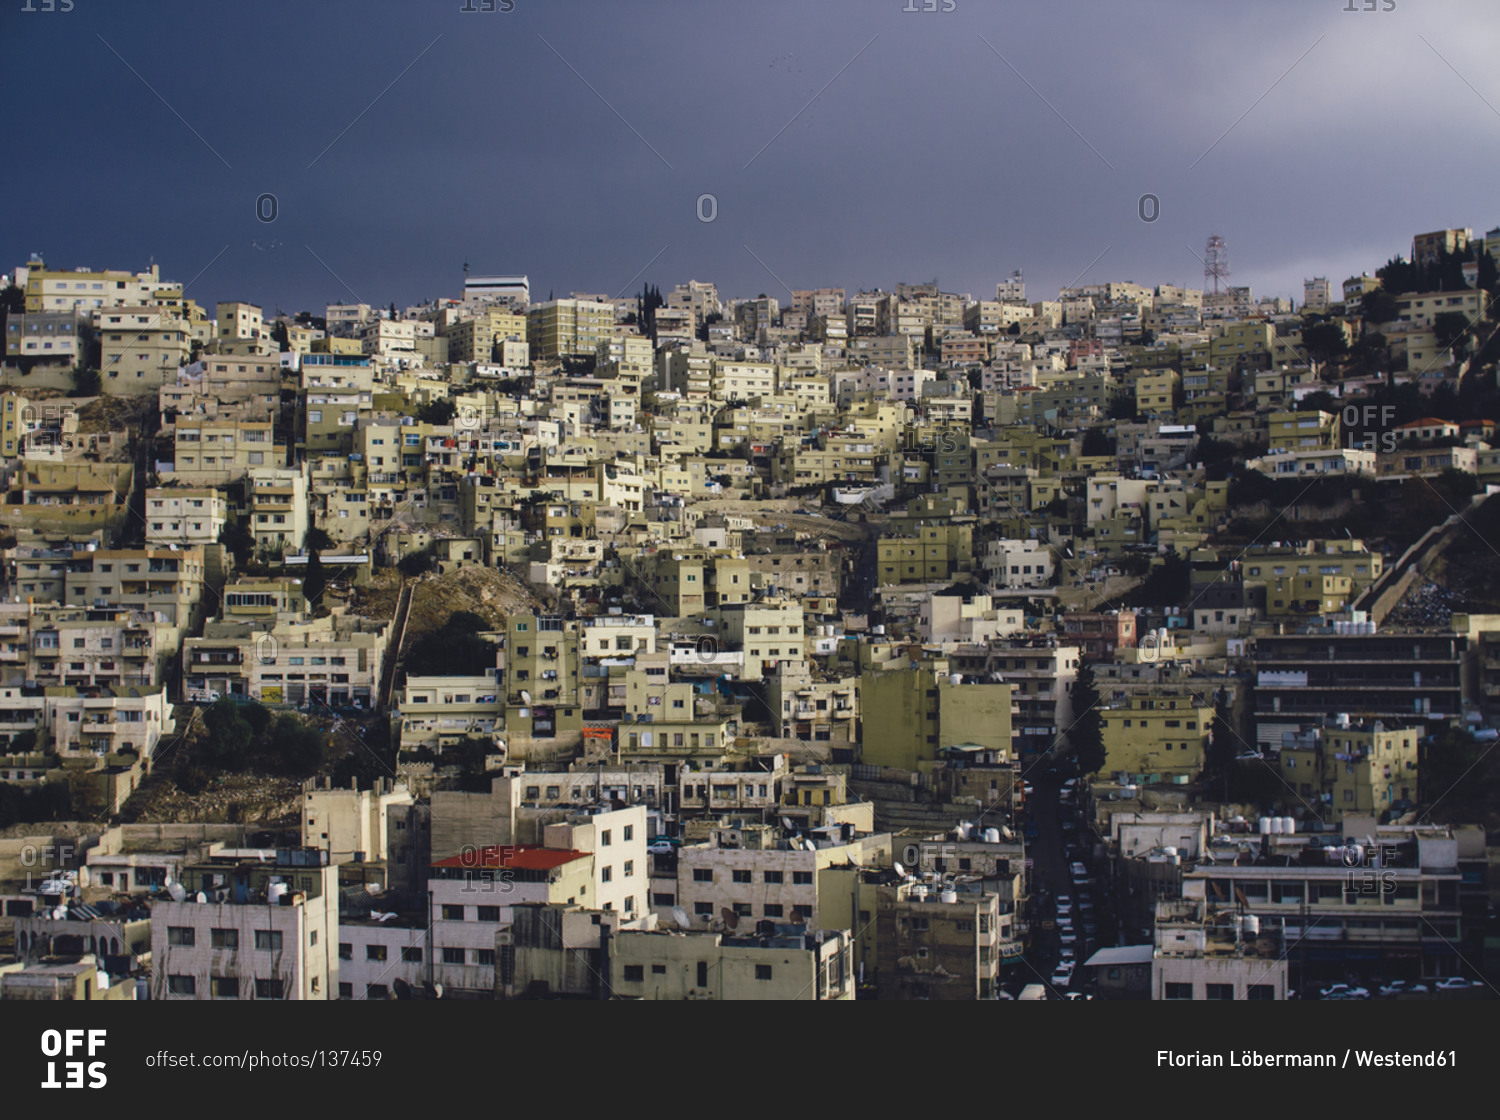 City view before a thunderstorm, Amman, Jordan